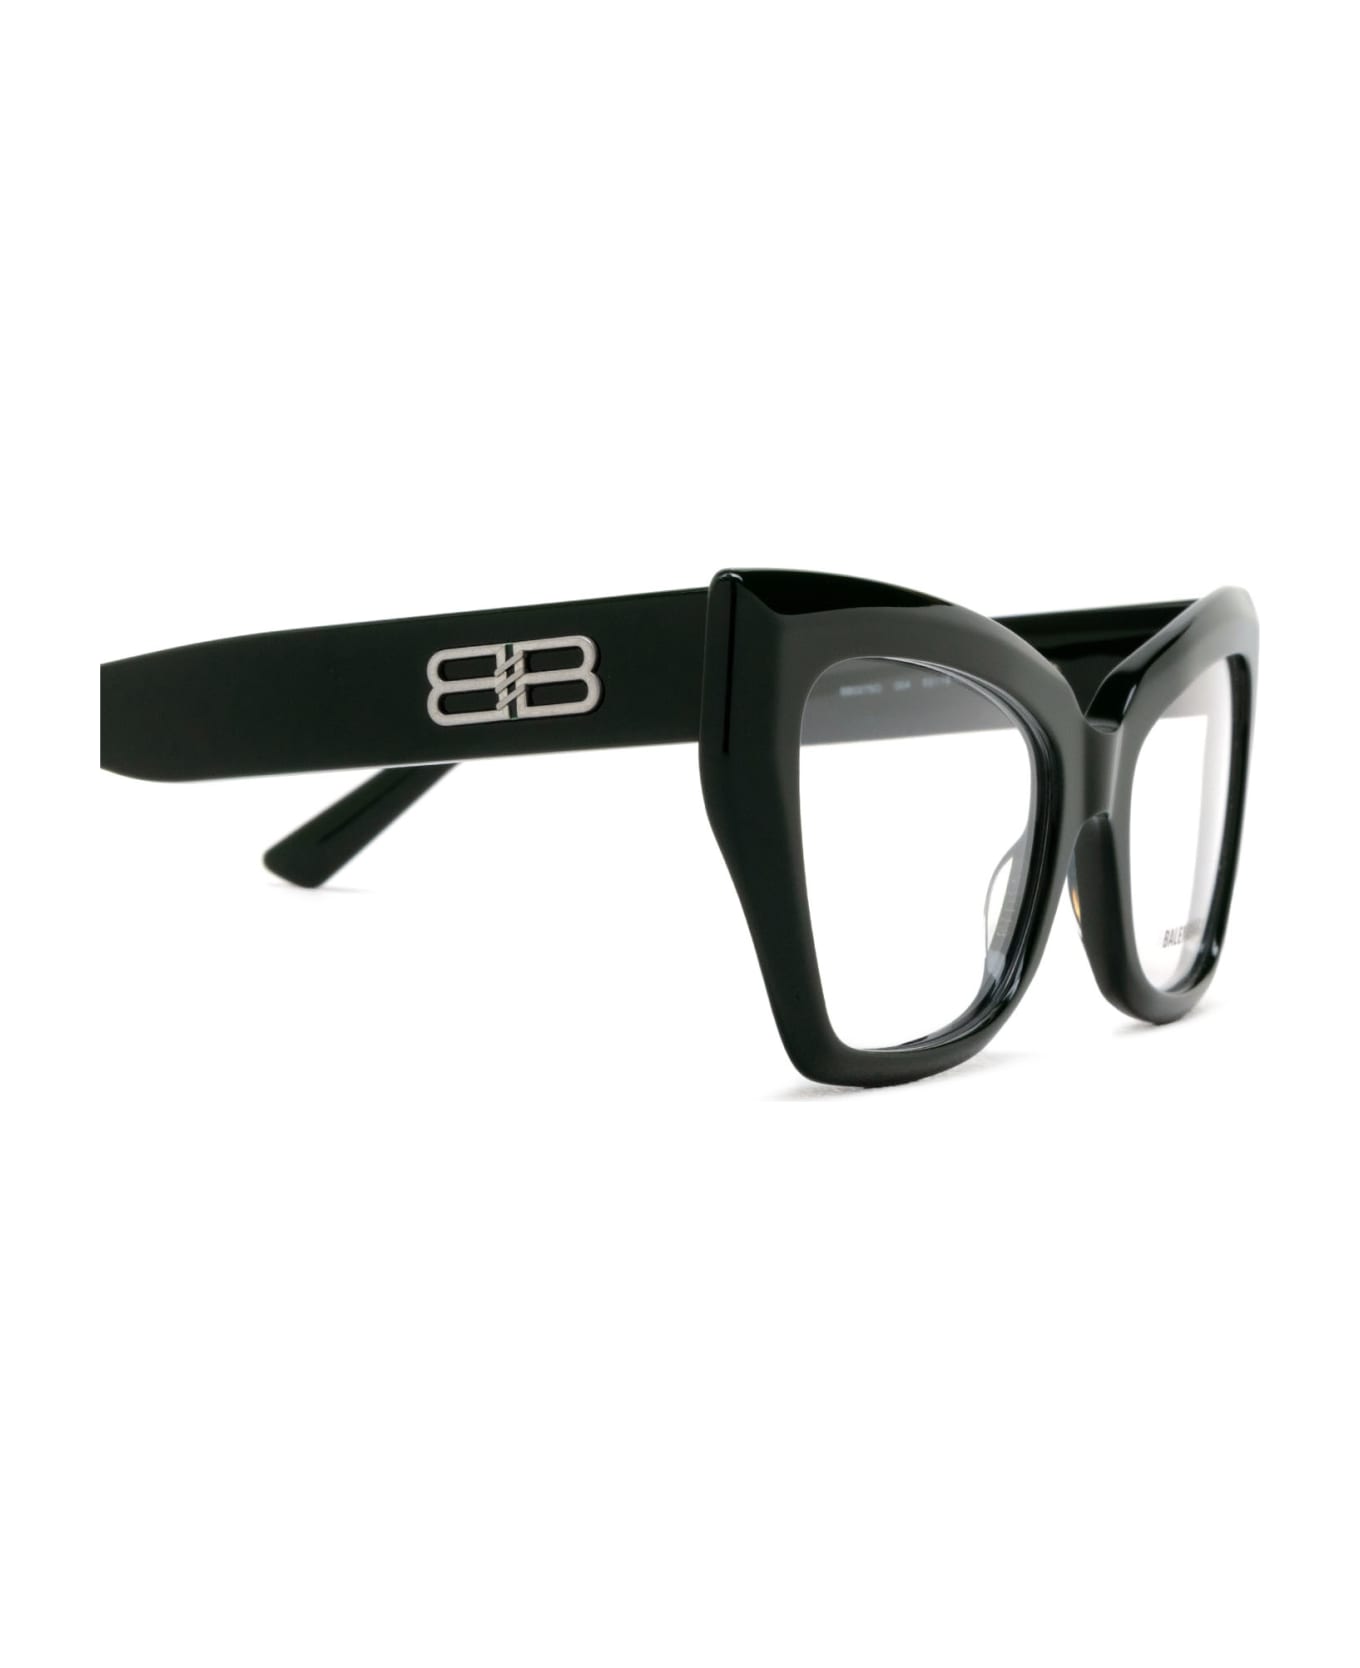 Balenciaga Eyewear Bb0275o Glasses - Green